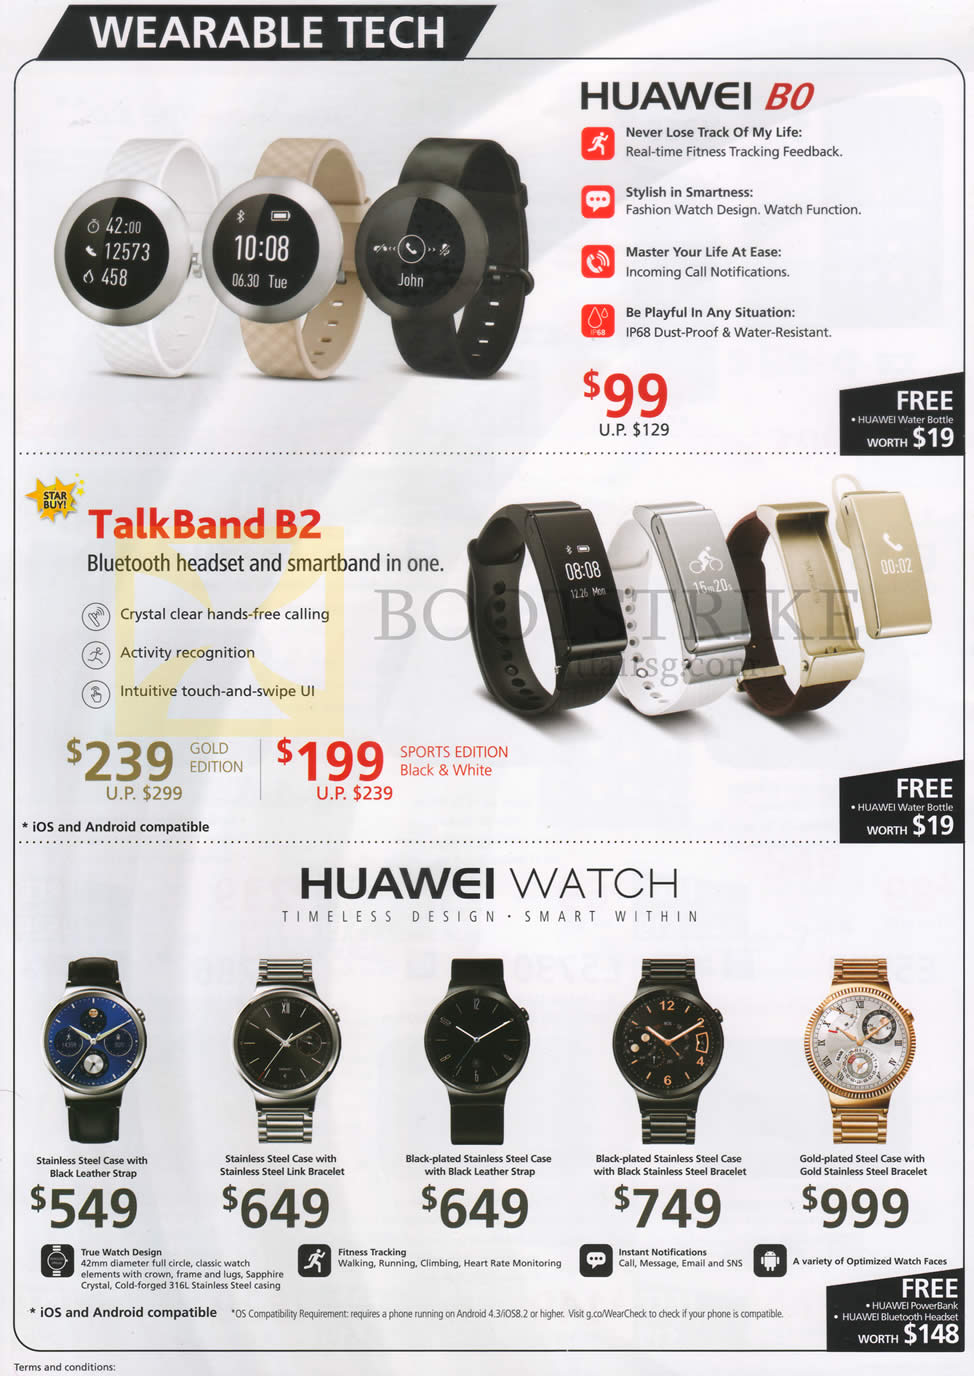 IT SHOW 2016 price list image brochure of Convergent Huawei Wearable Tech B0, Watch, Talkband B2